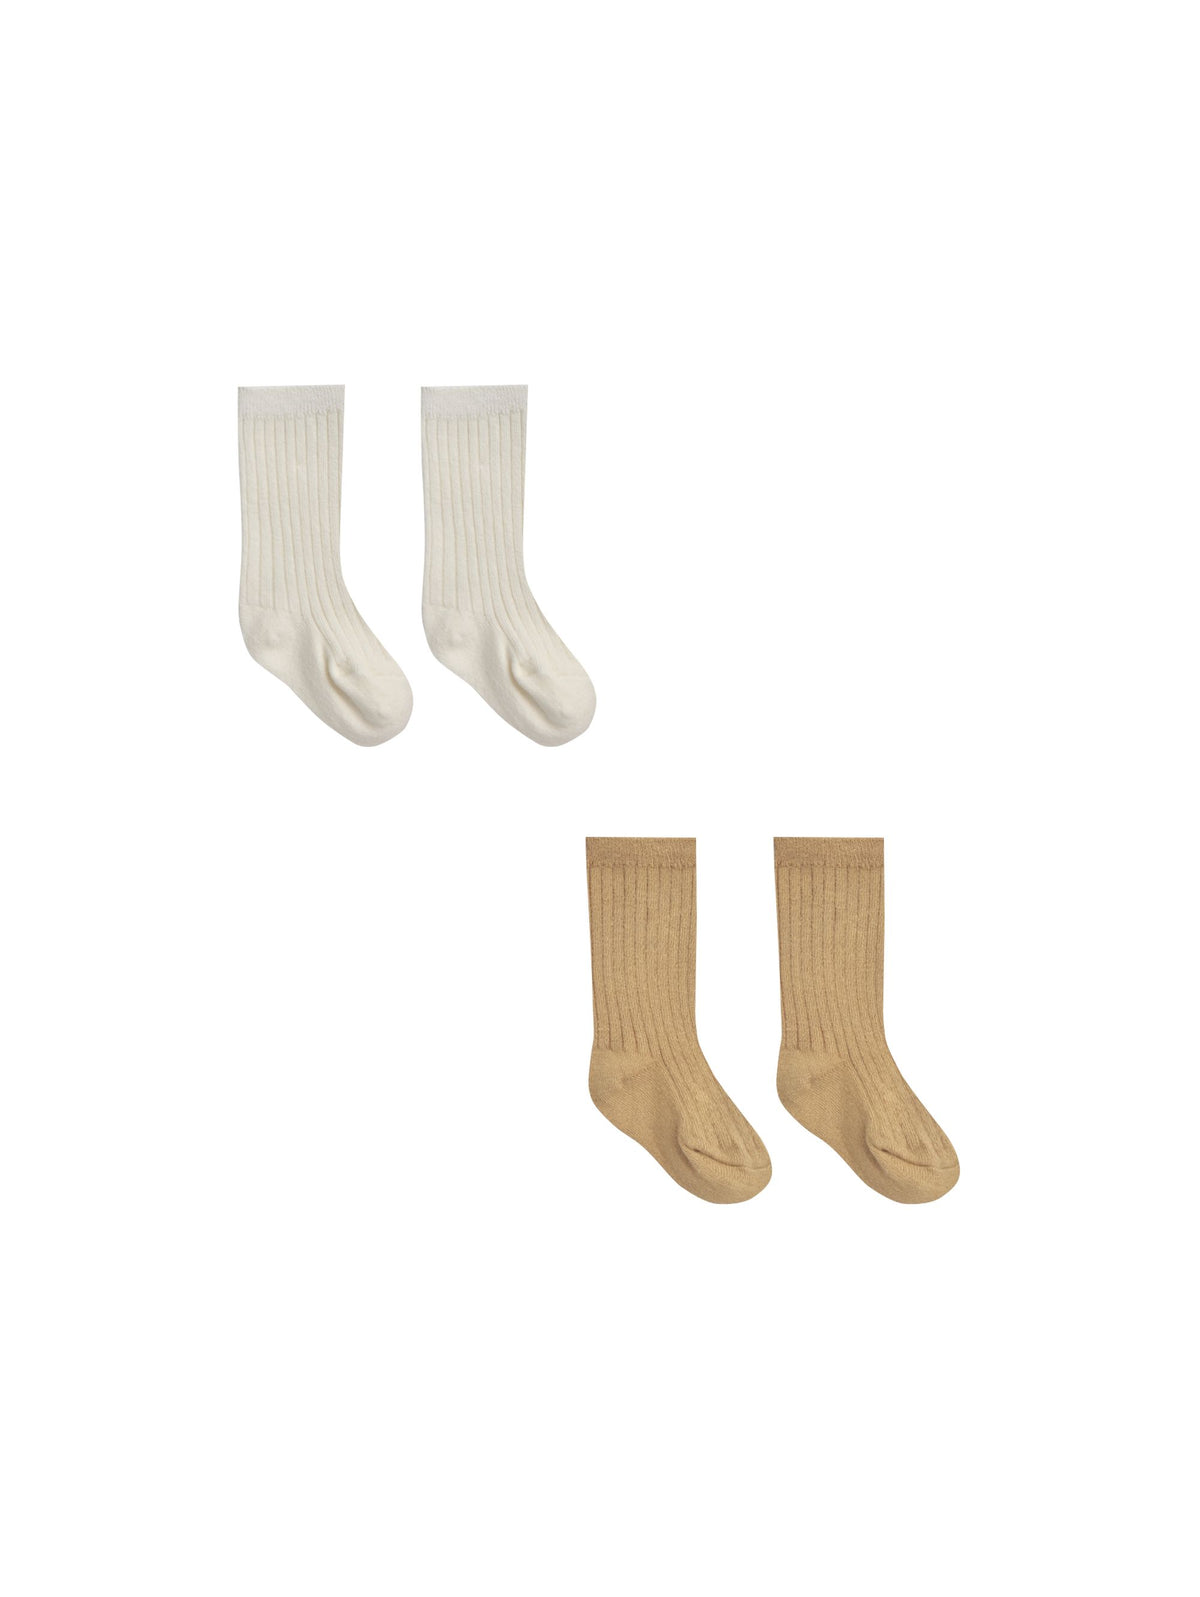 quincy mae socks set - ivory / honey